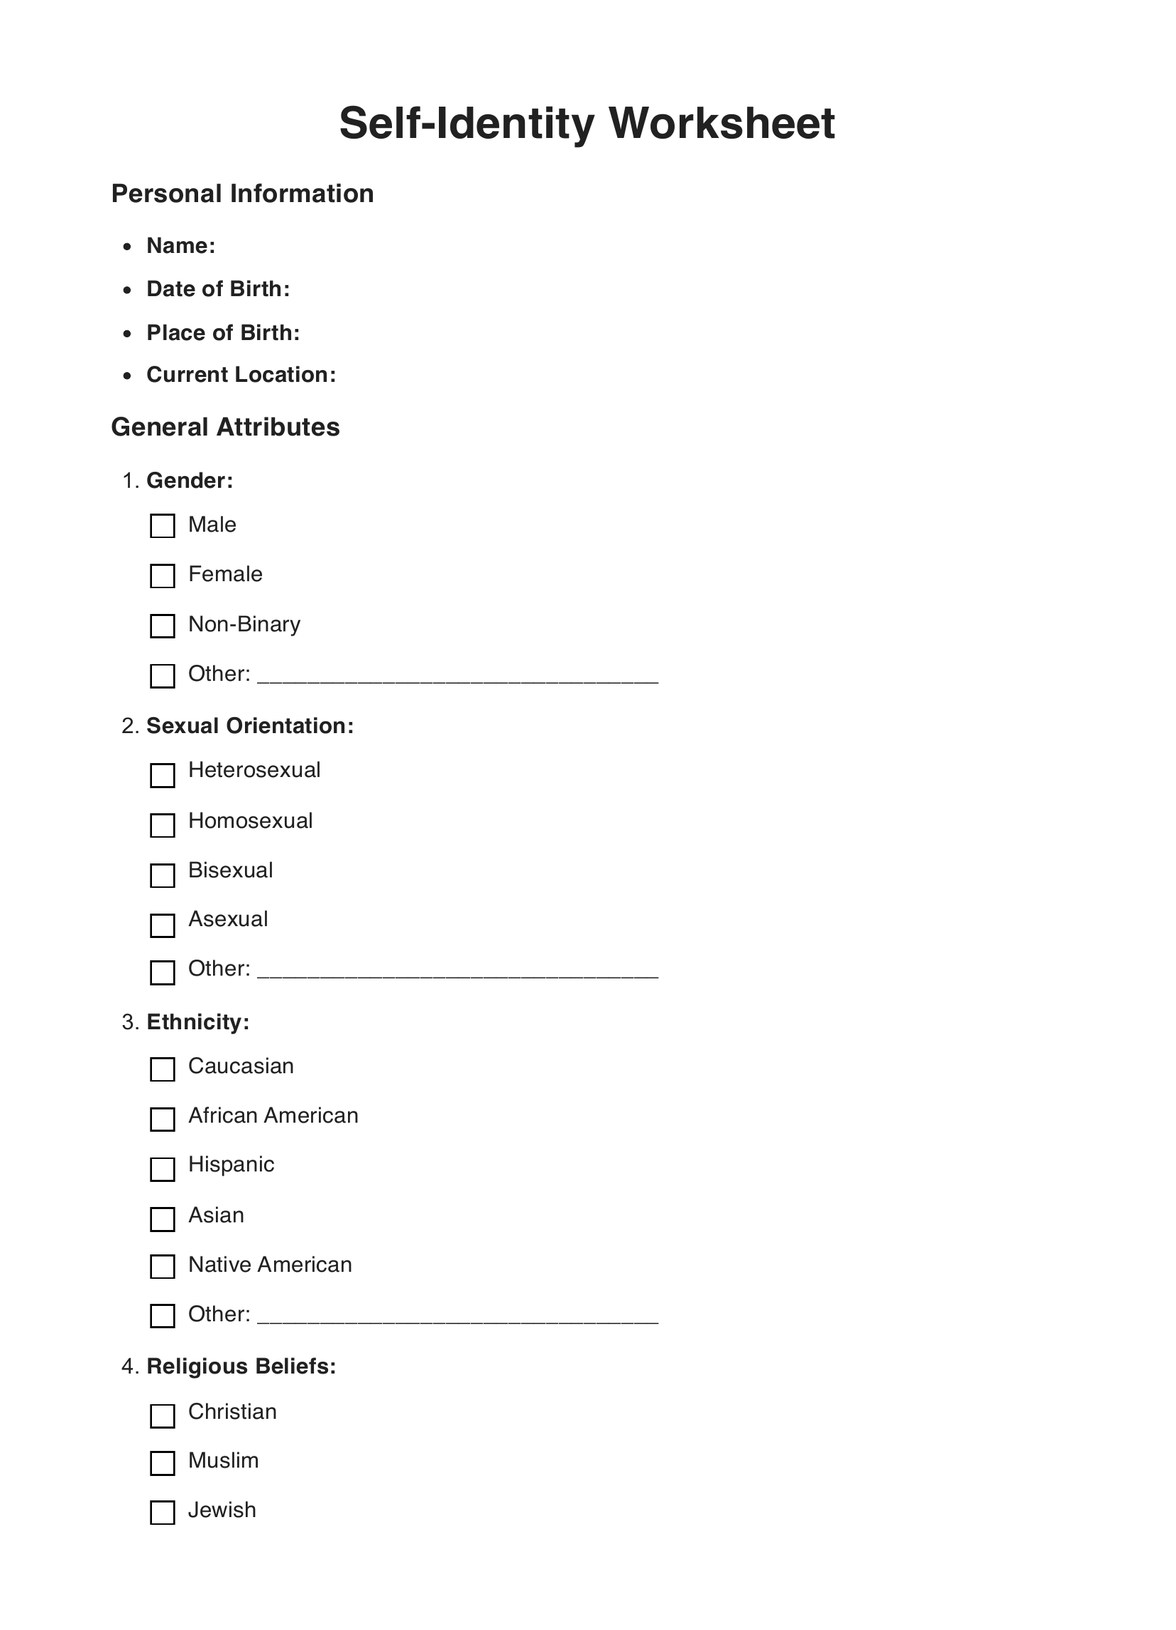 Self-Identity Worksheets PDF Example